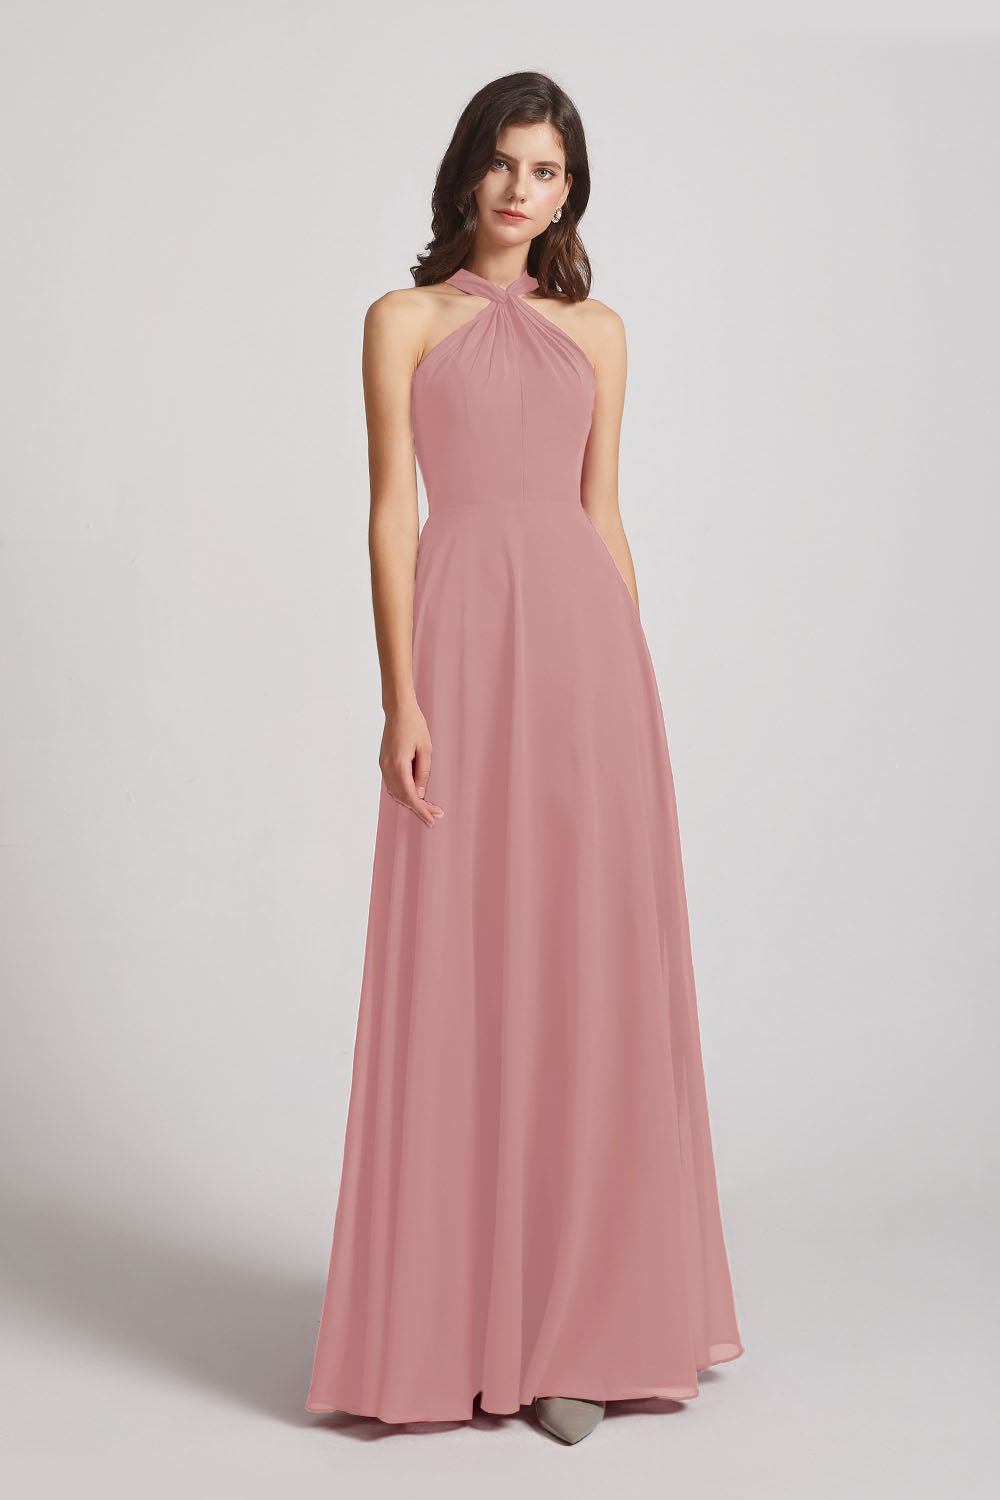 Alfa Bridal Dusty Pink Floor Length Chiffon Bridesmaid Dresses with Criss Cross Neckline (AF0113)